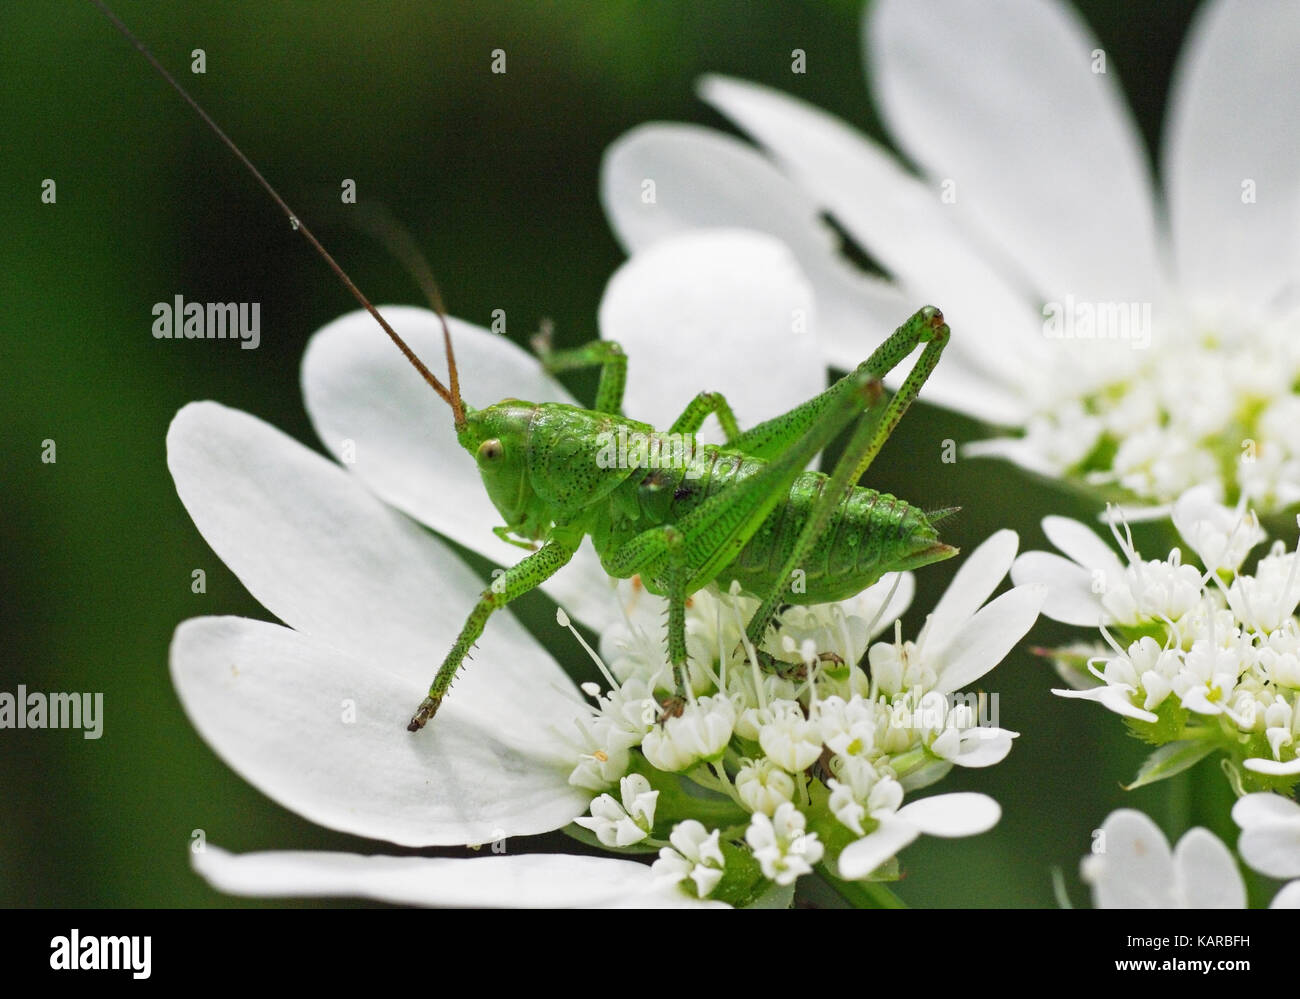 a grasshopper is sitting on the wildflower Orlaya  grandiflora, the White laceflower Stock Photo